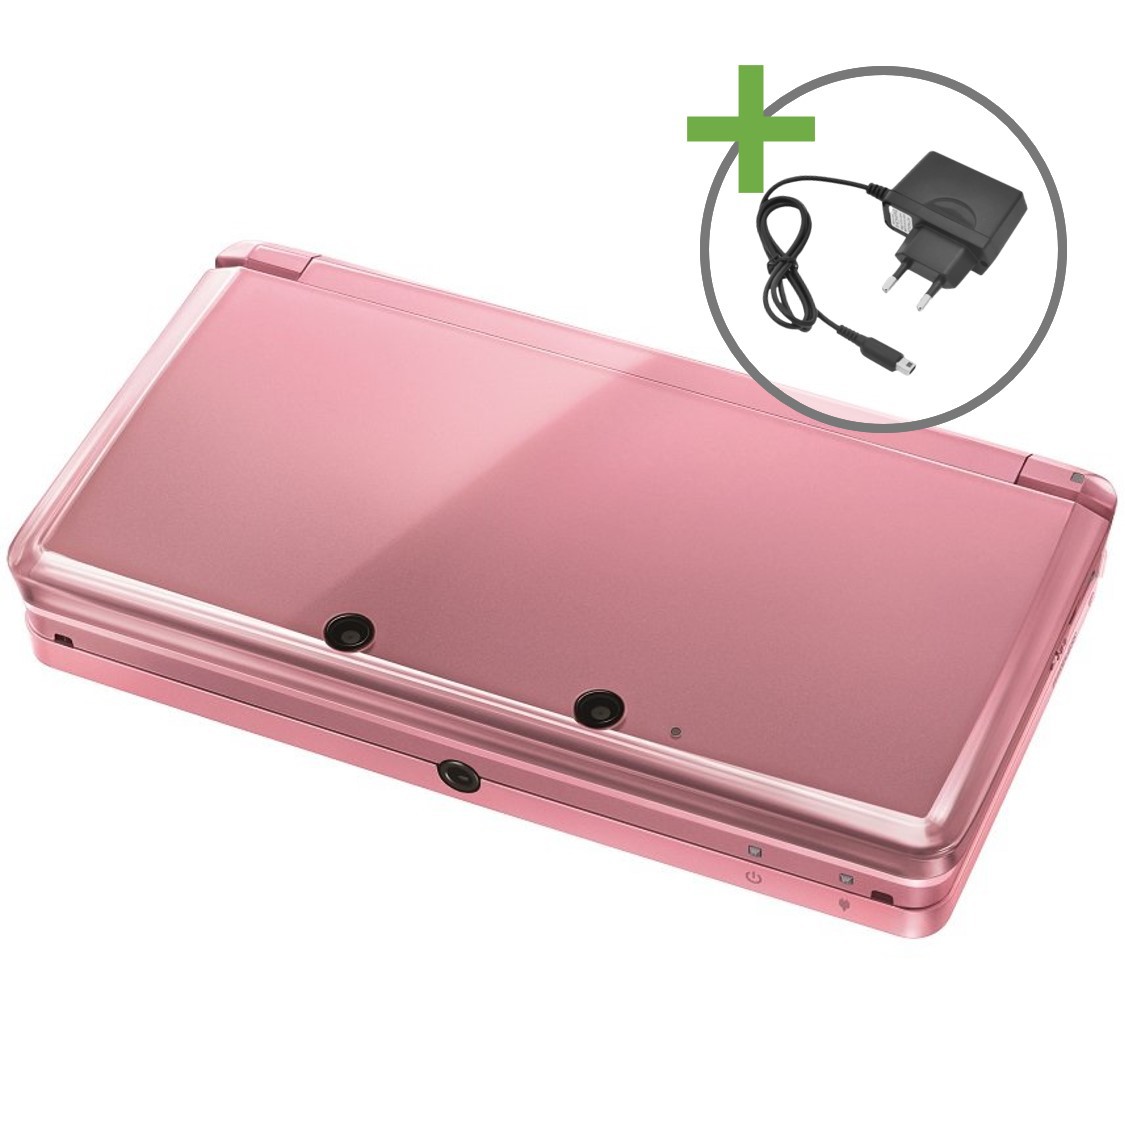 Nintendo 3DS - Coral Pink - Nintendo 3DS Hardware - 2